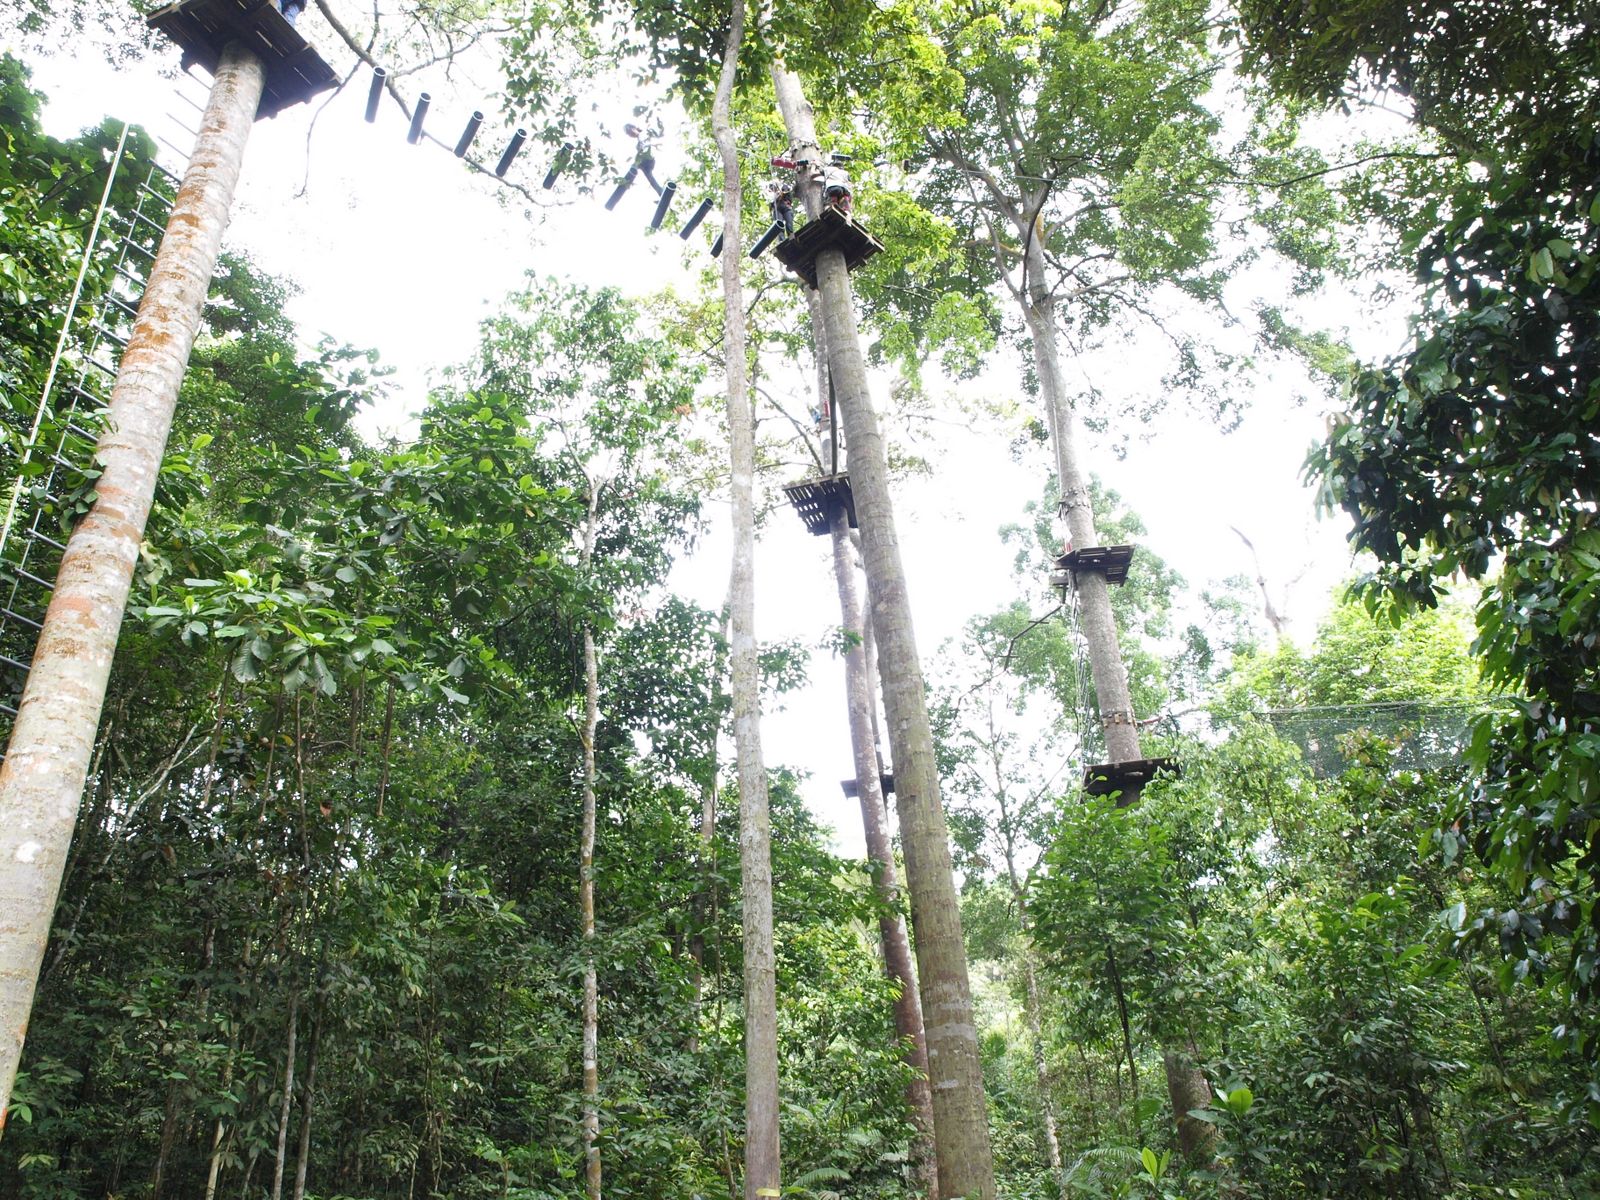 Skytrex Shah Alam Taman Botani - Contohlah f